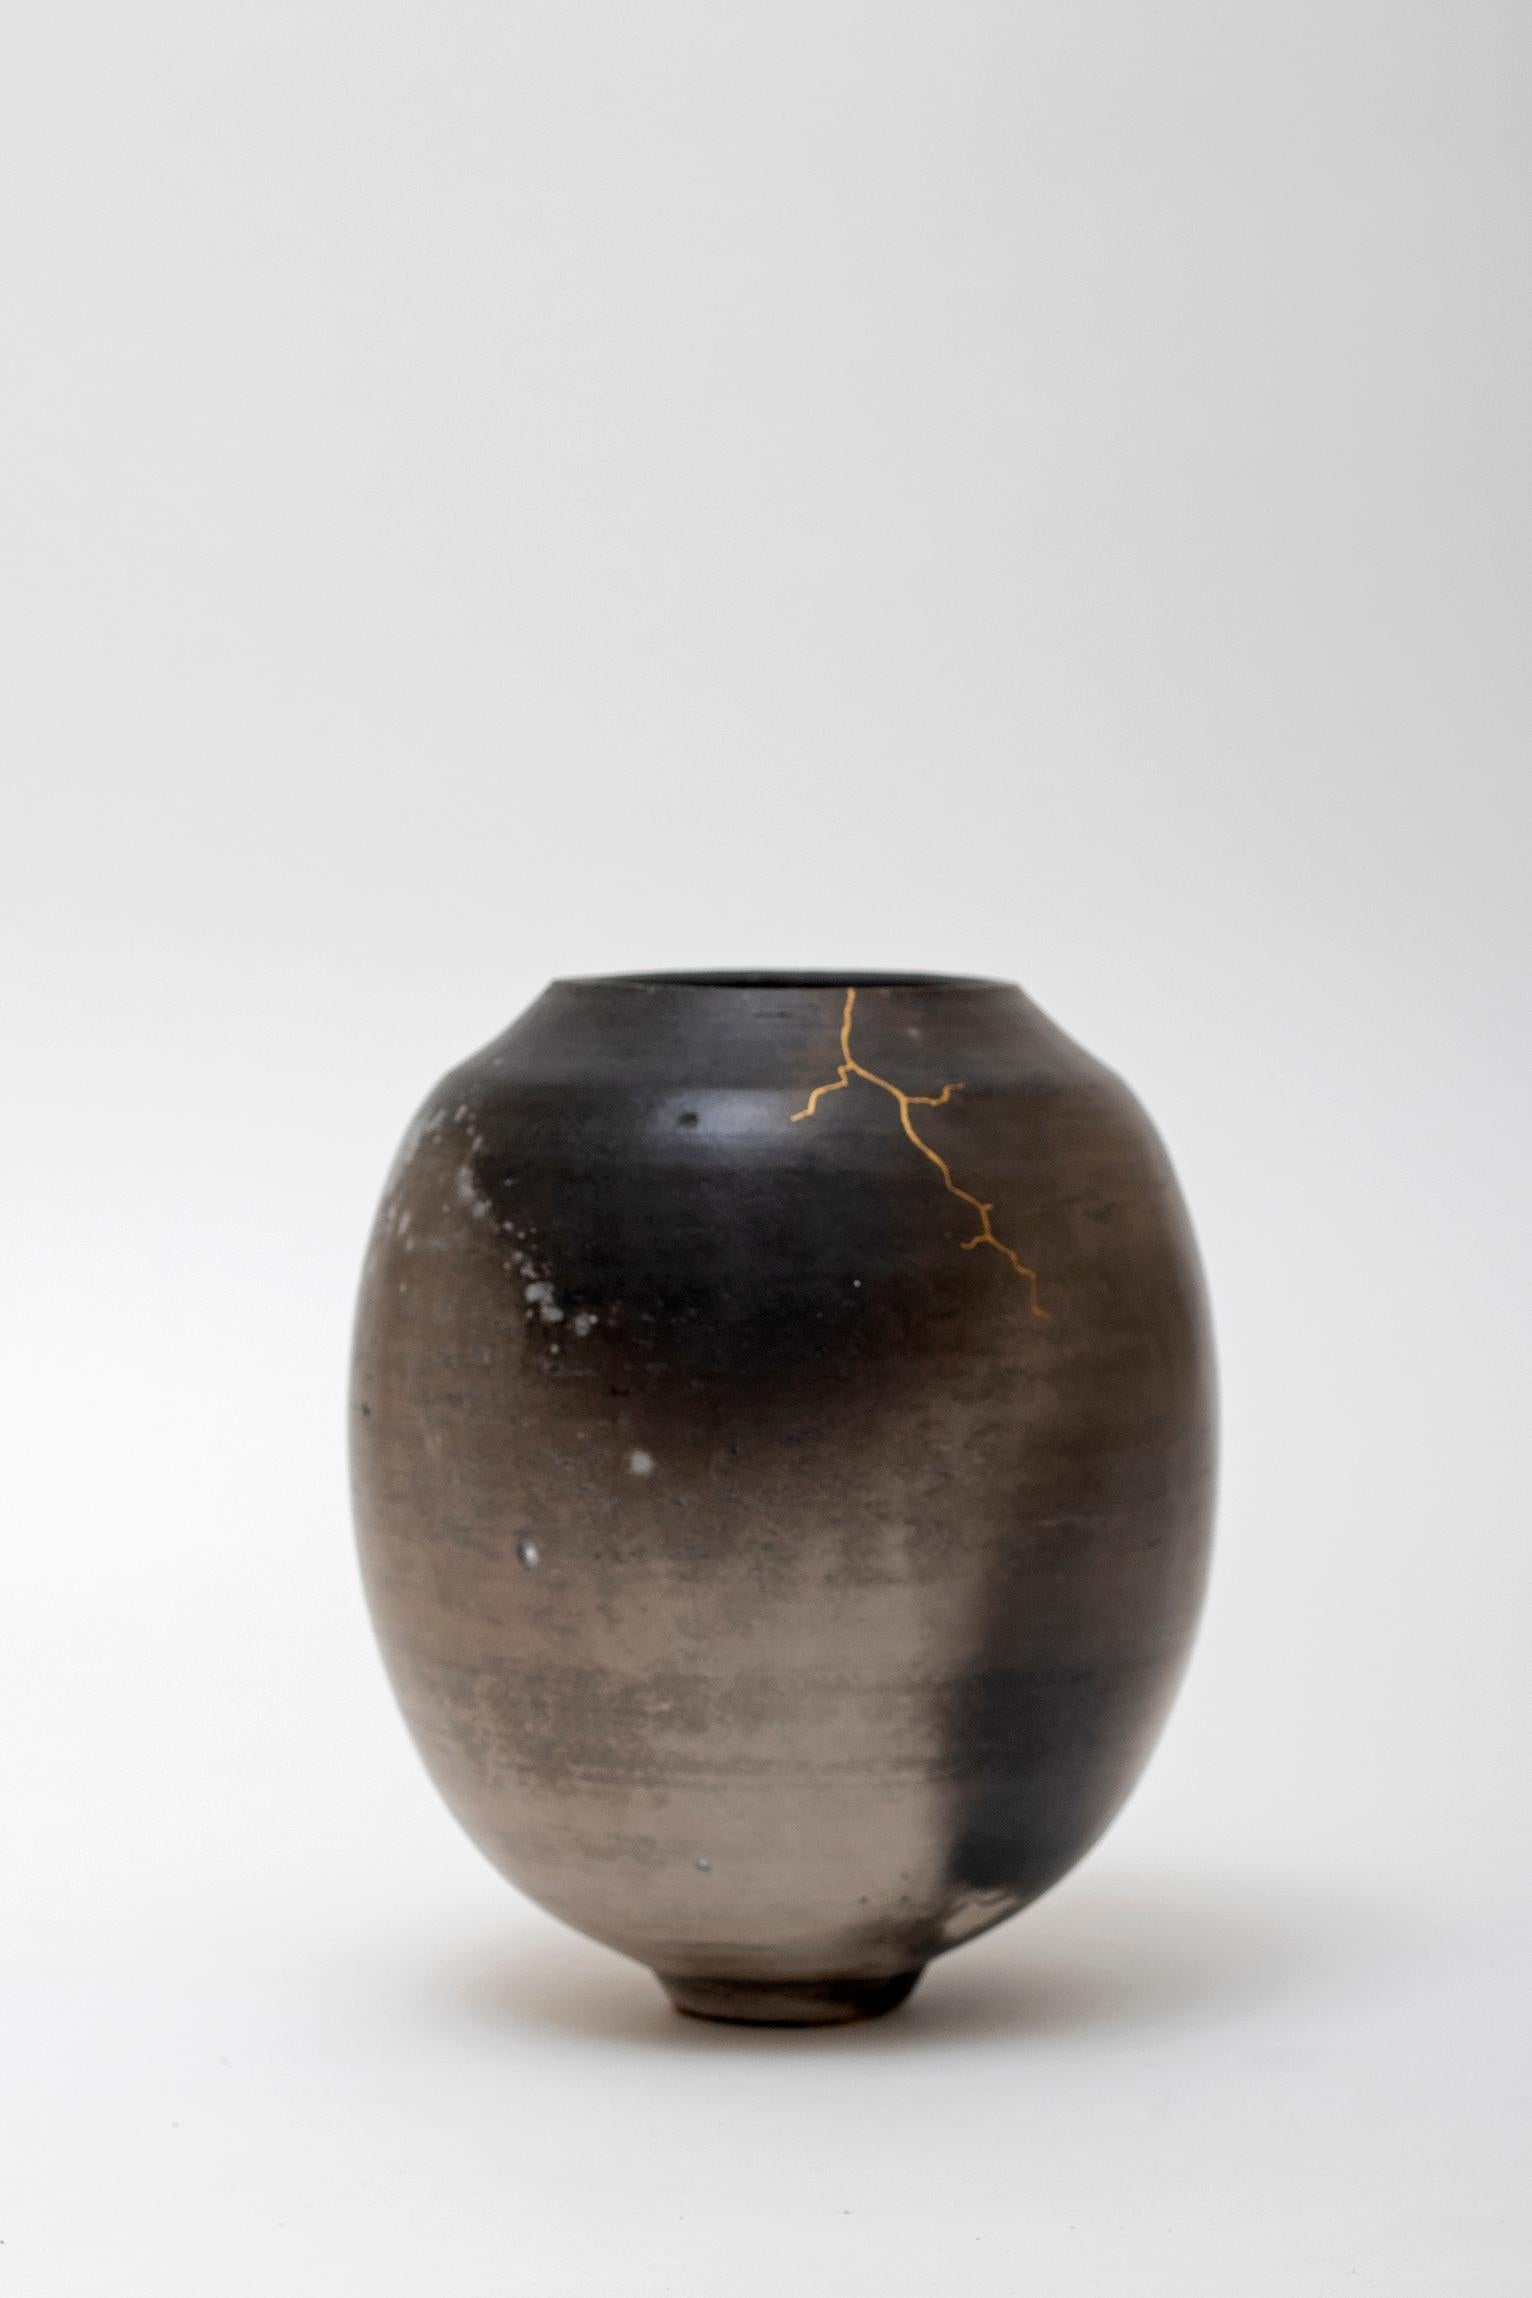 Gold Kintsugi Ceramic Vase by Karen Swami